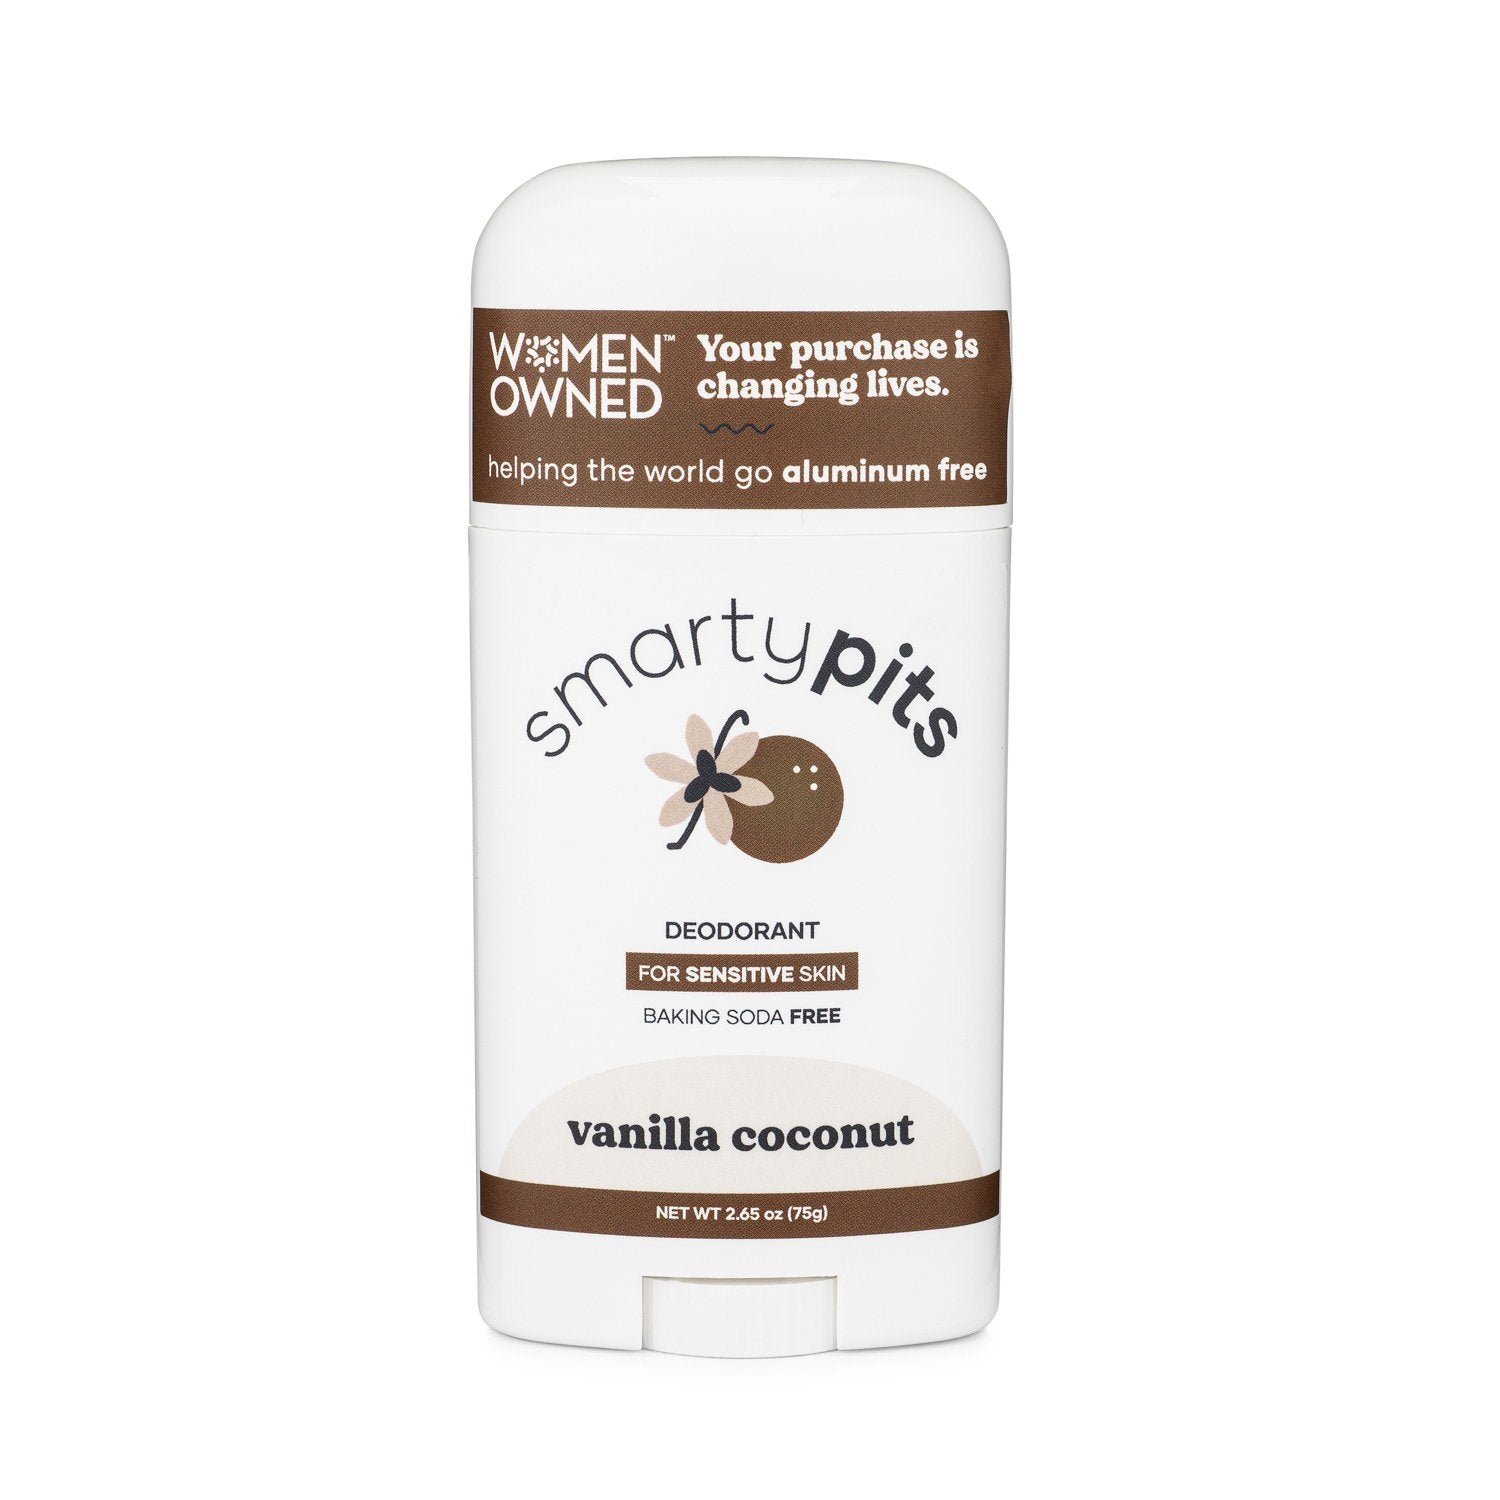 Vanilla Coconut